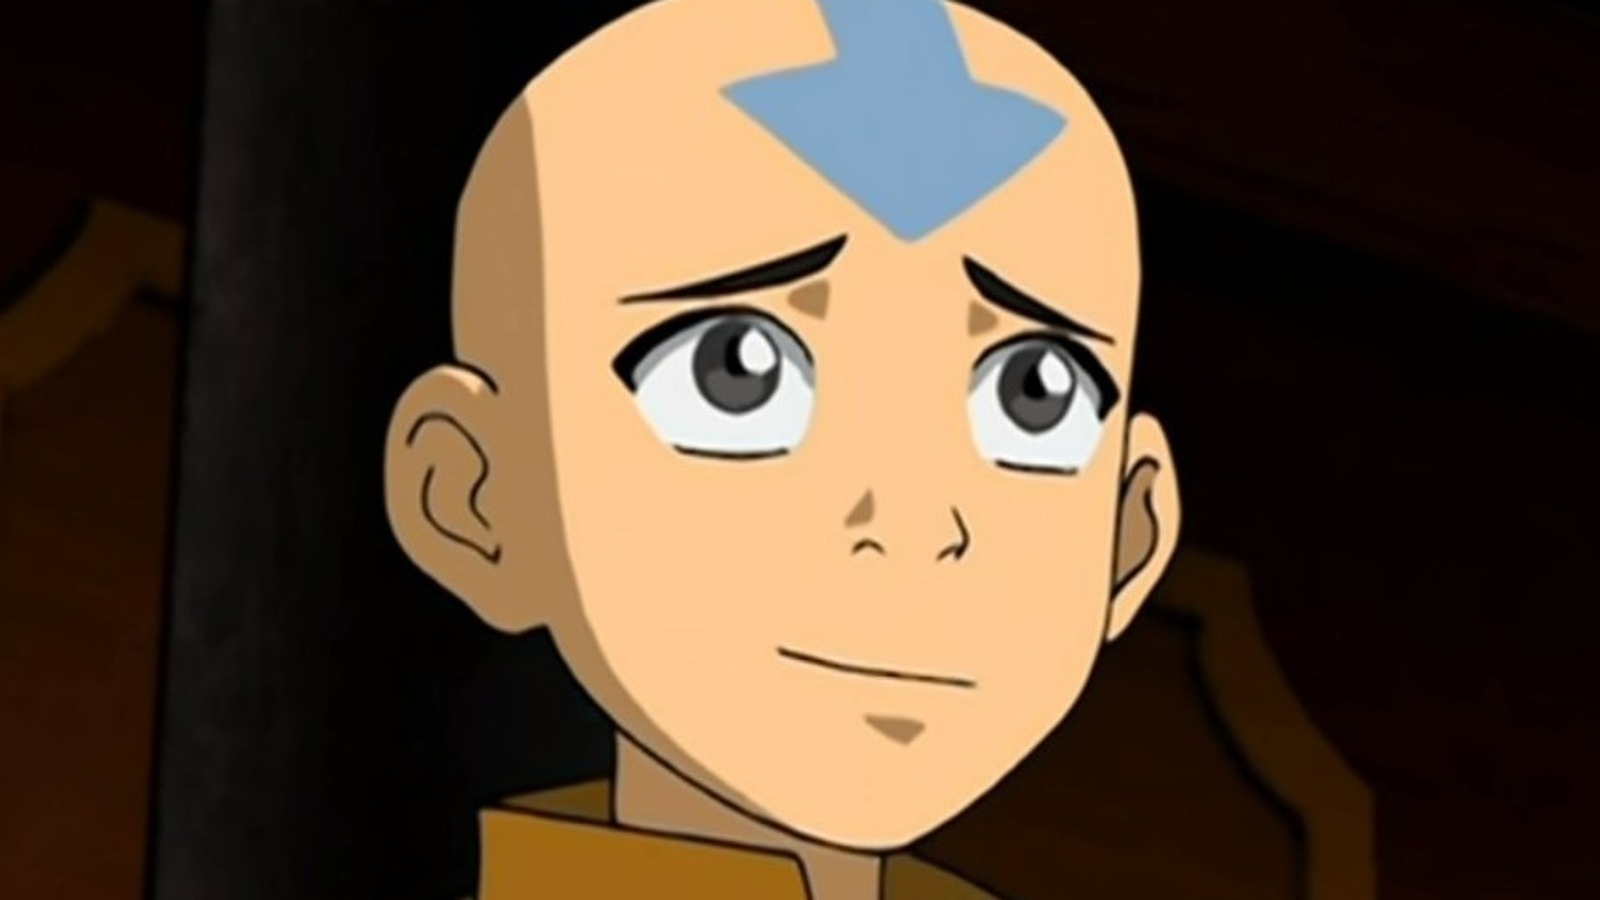 Avatar: The Last Airbender S2, Episode 18 Part-2